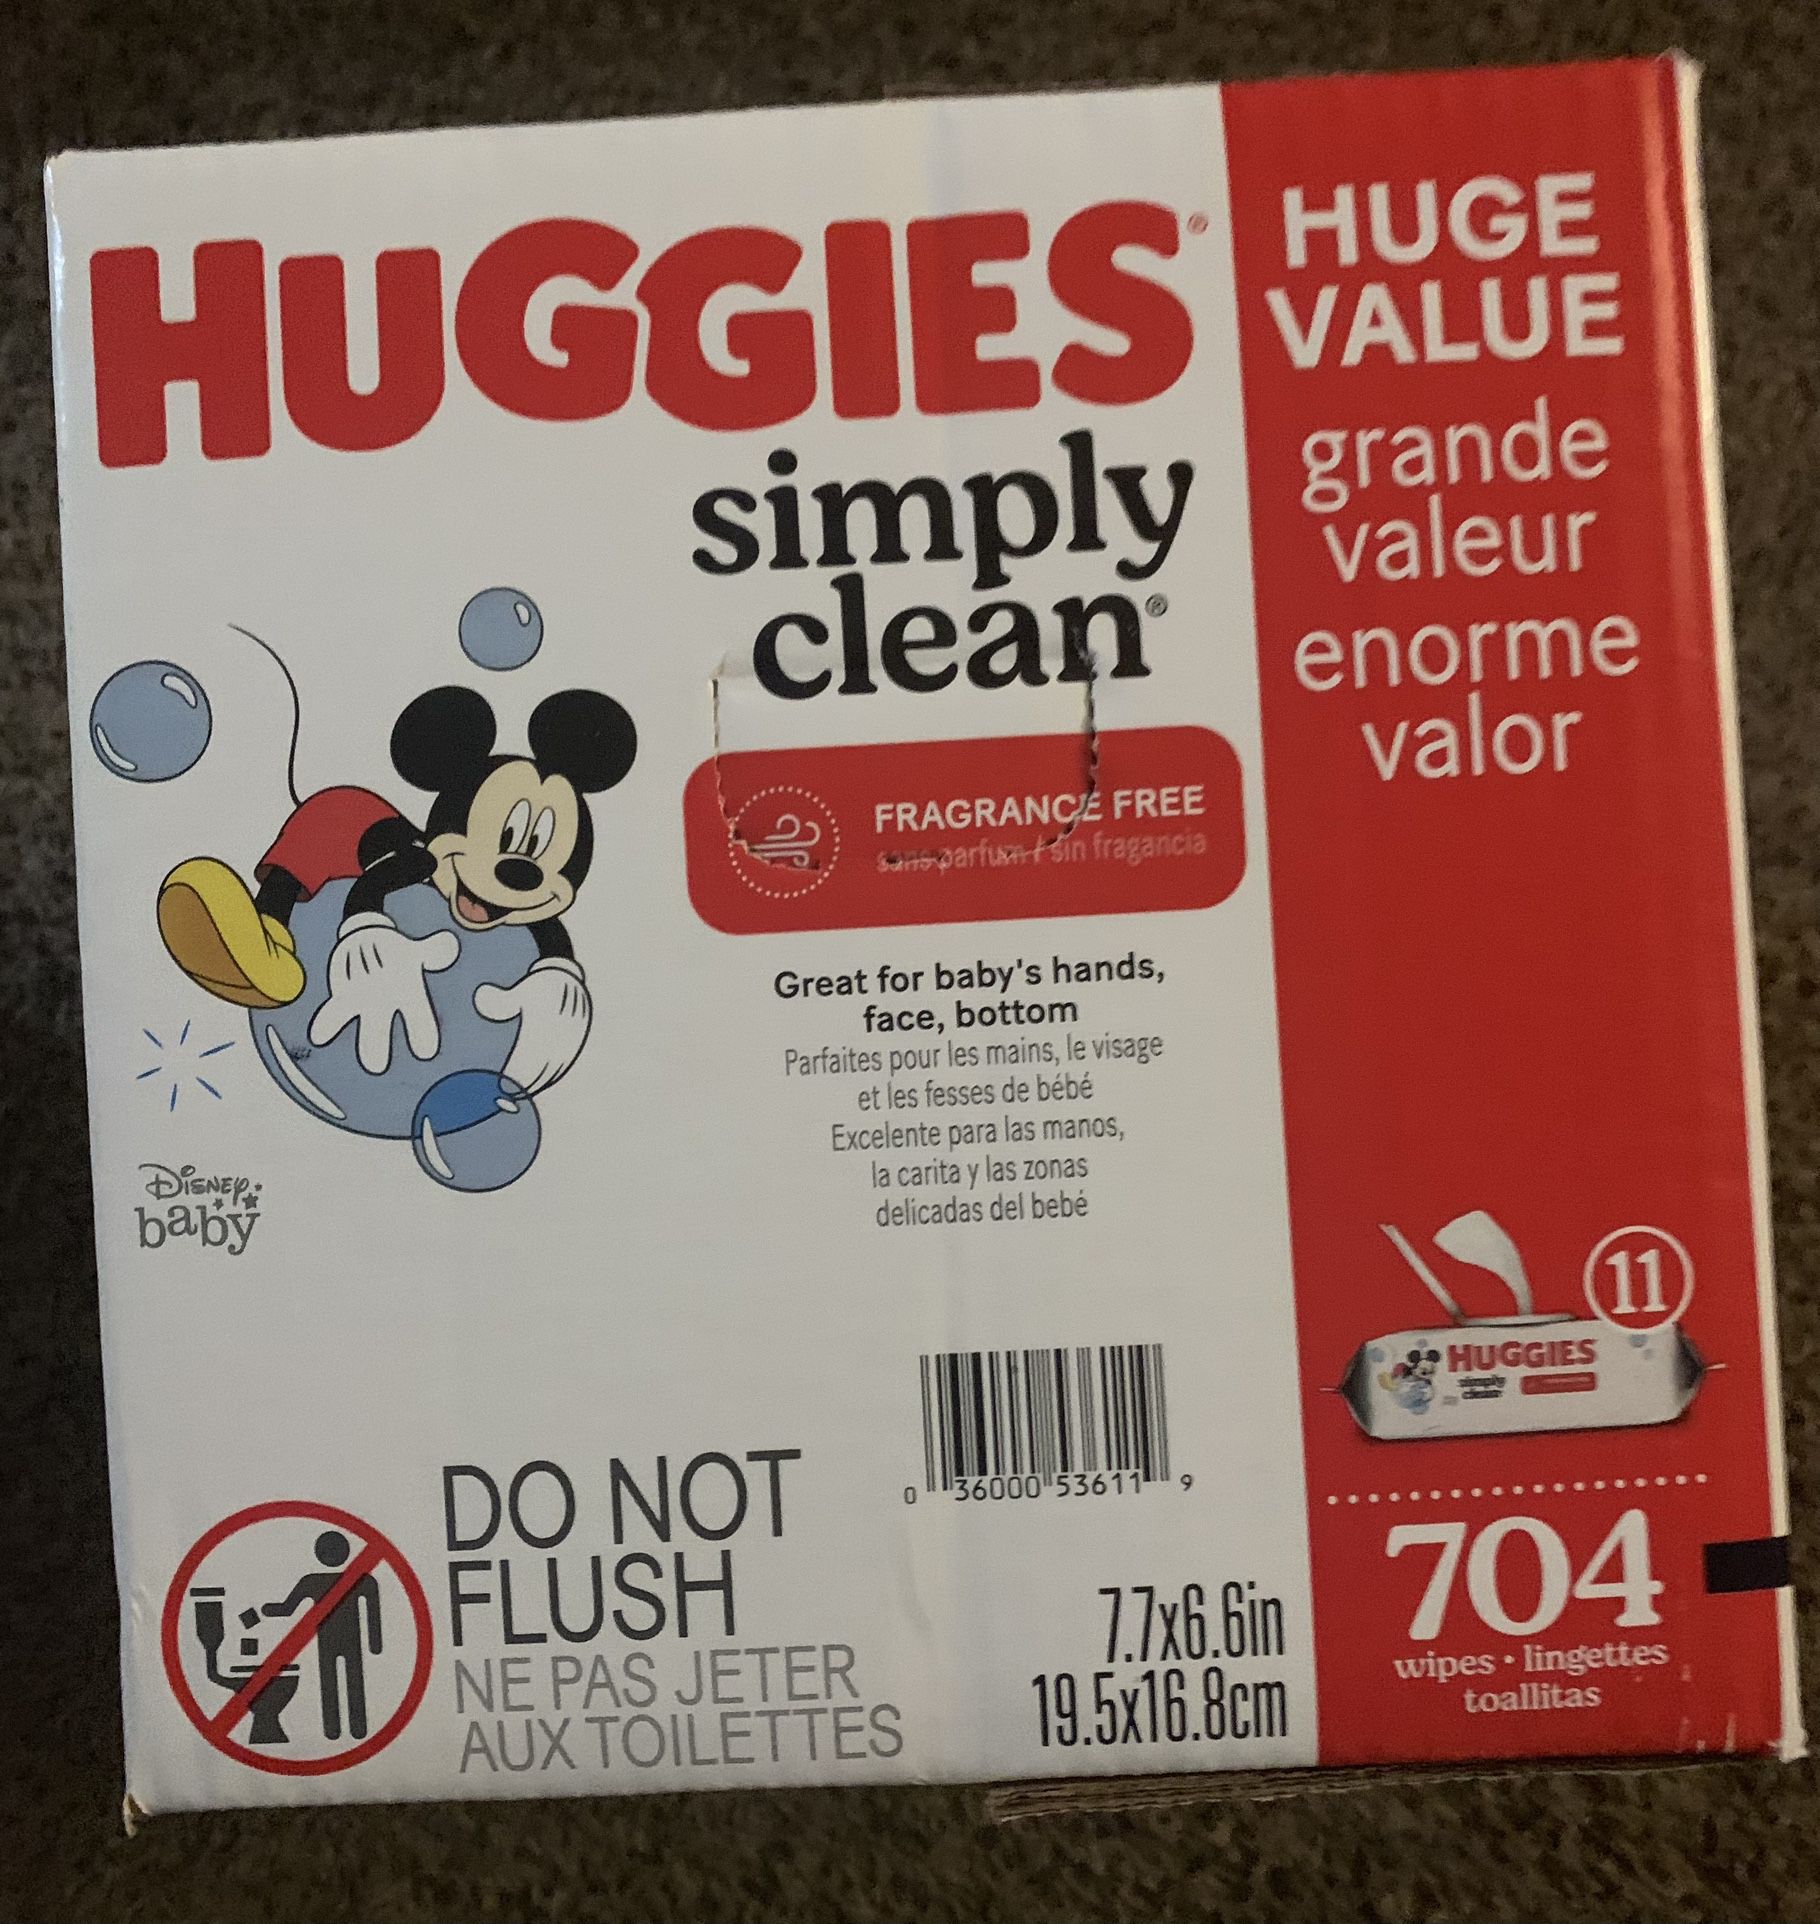 Huggies Wipes-Simply Clean  - 704 Count 